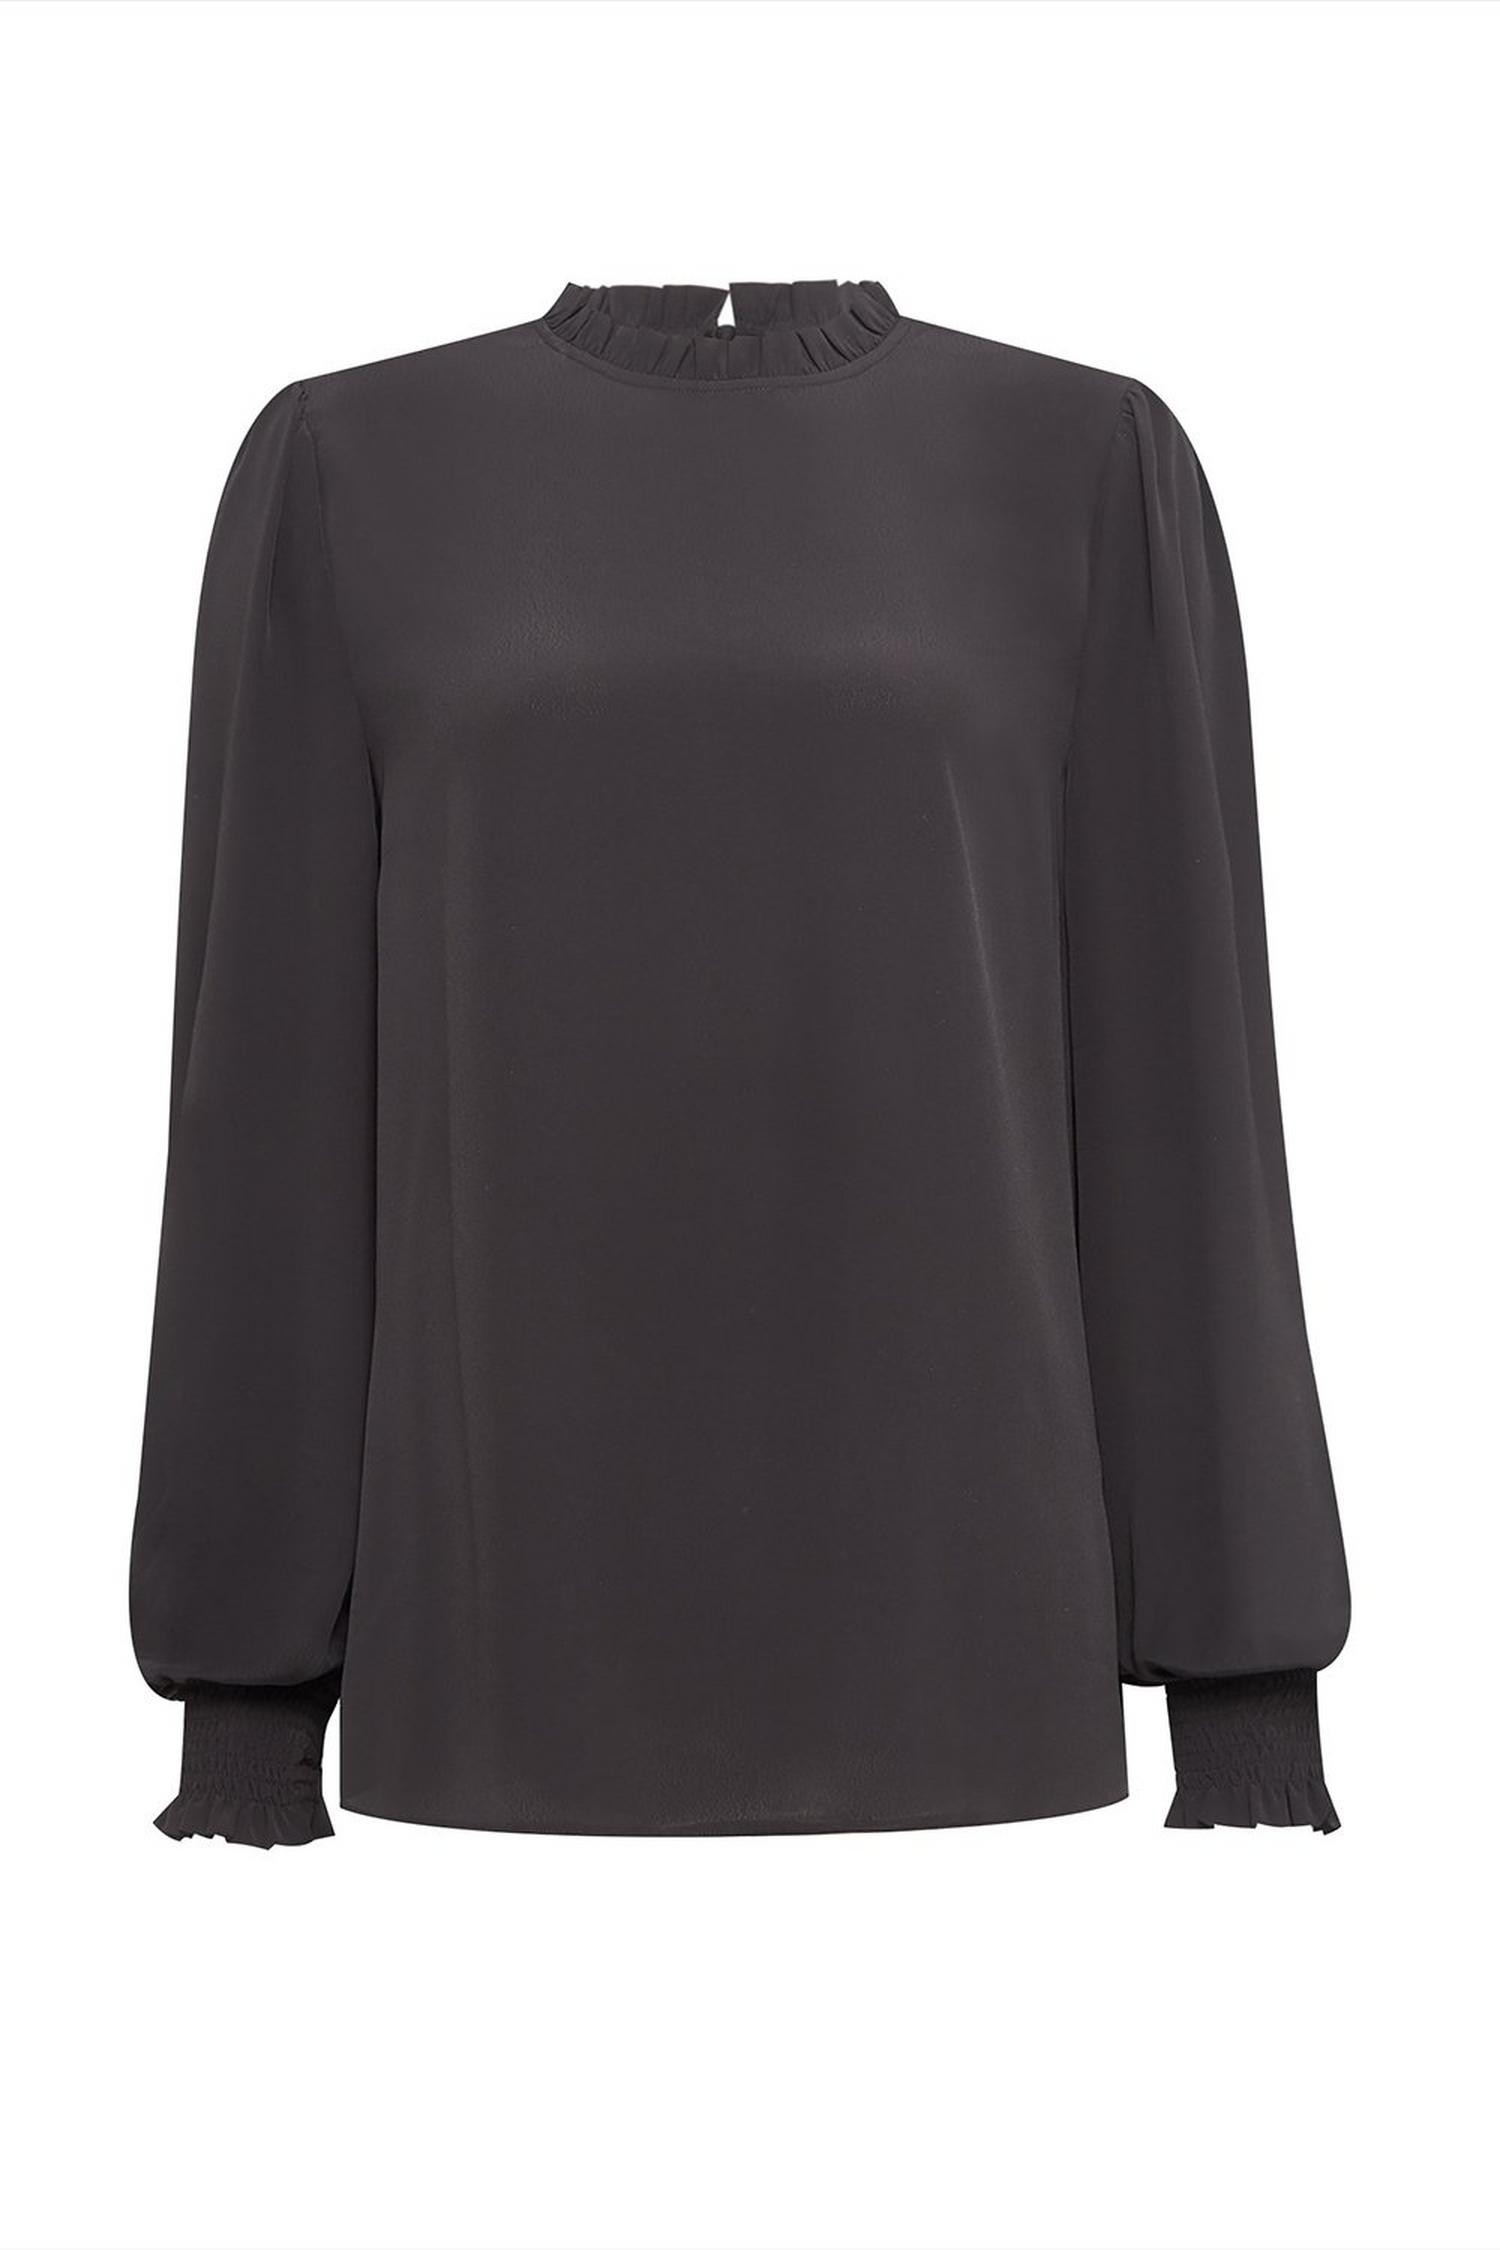 Tall Black Shirred Cuff Top | Dorothy Perkins UK